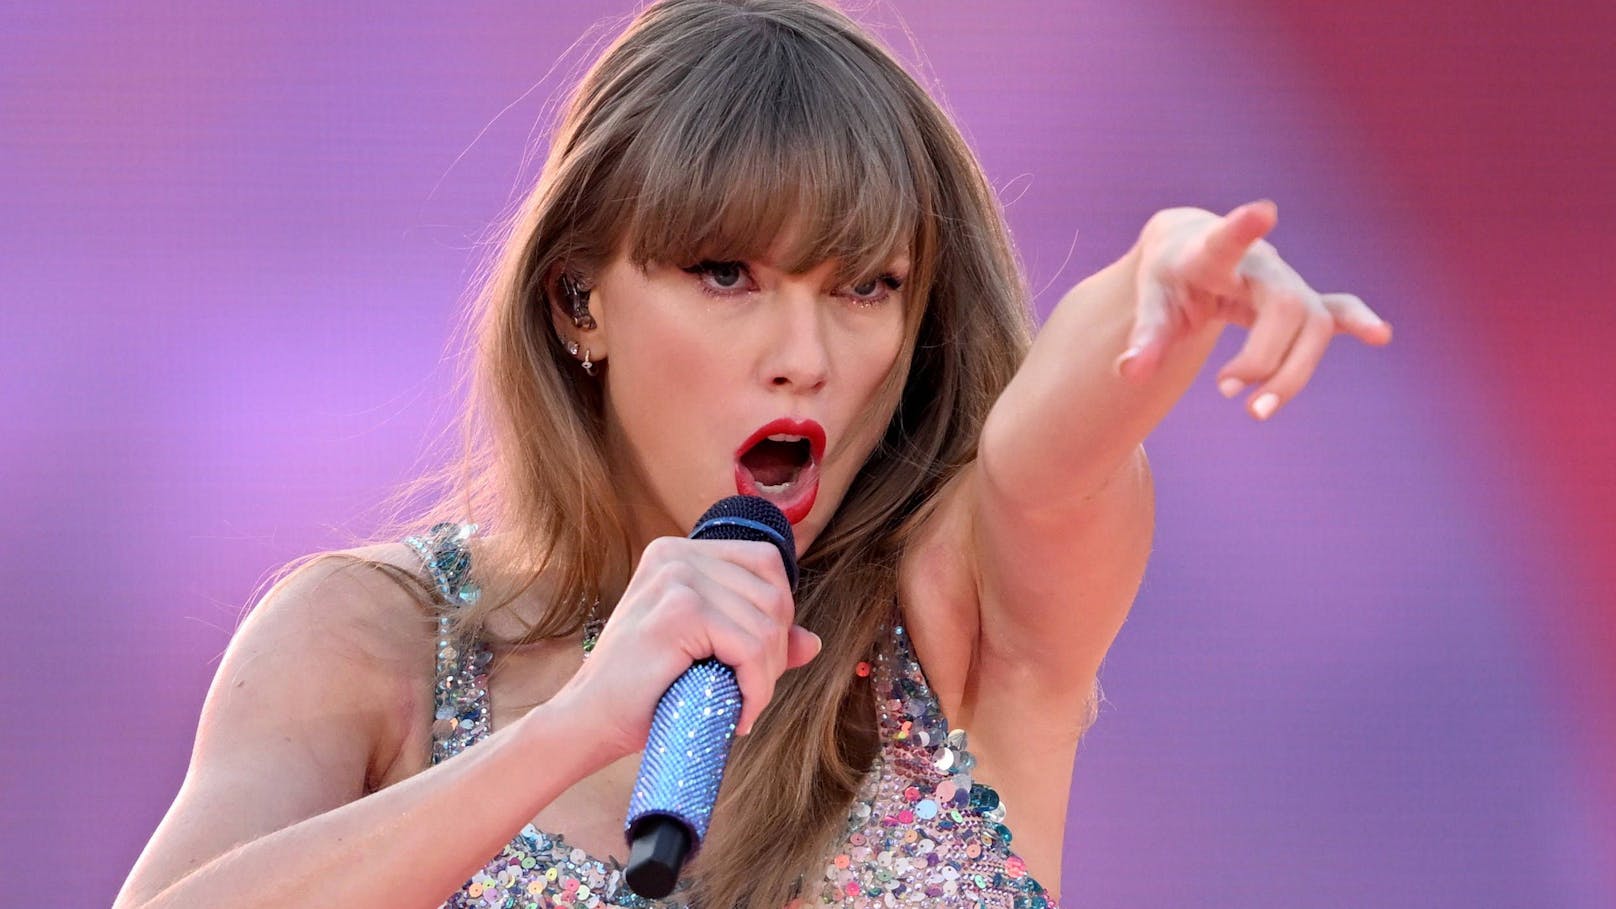 "Satanistische Rituale": Vorwürfe gegen Taylor Swift